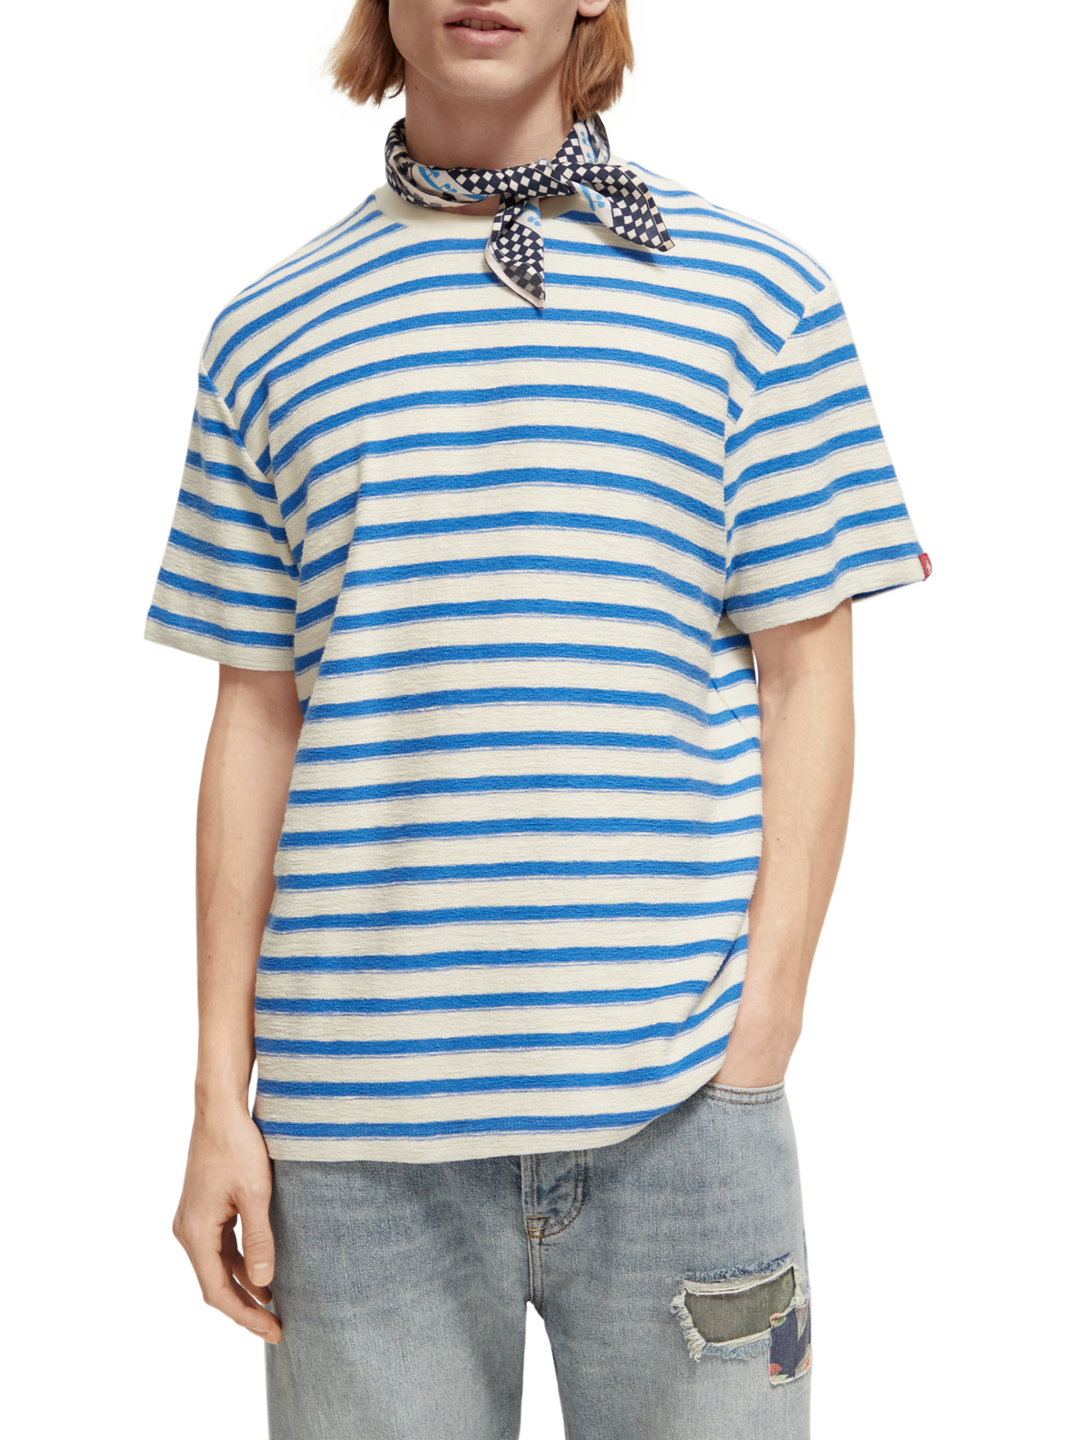 Relaxed Fit Yarn Dye Stripe Tee Shirt in Ecru Blue | Buster McGee